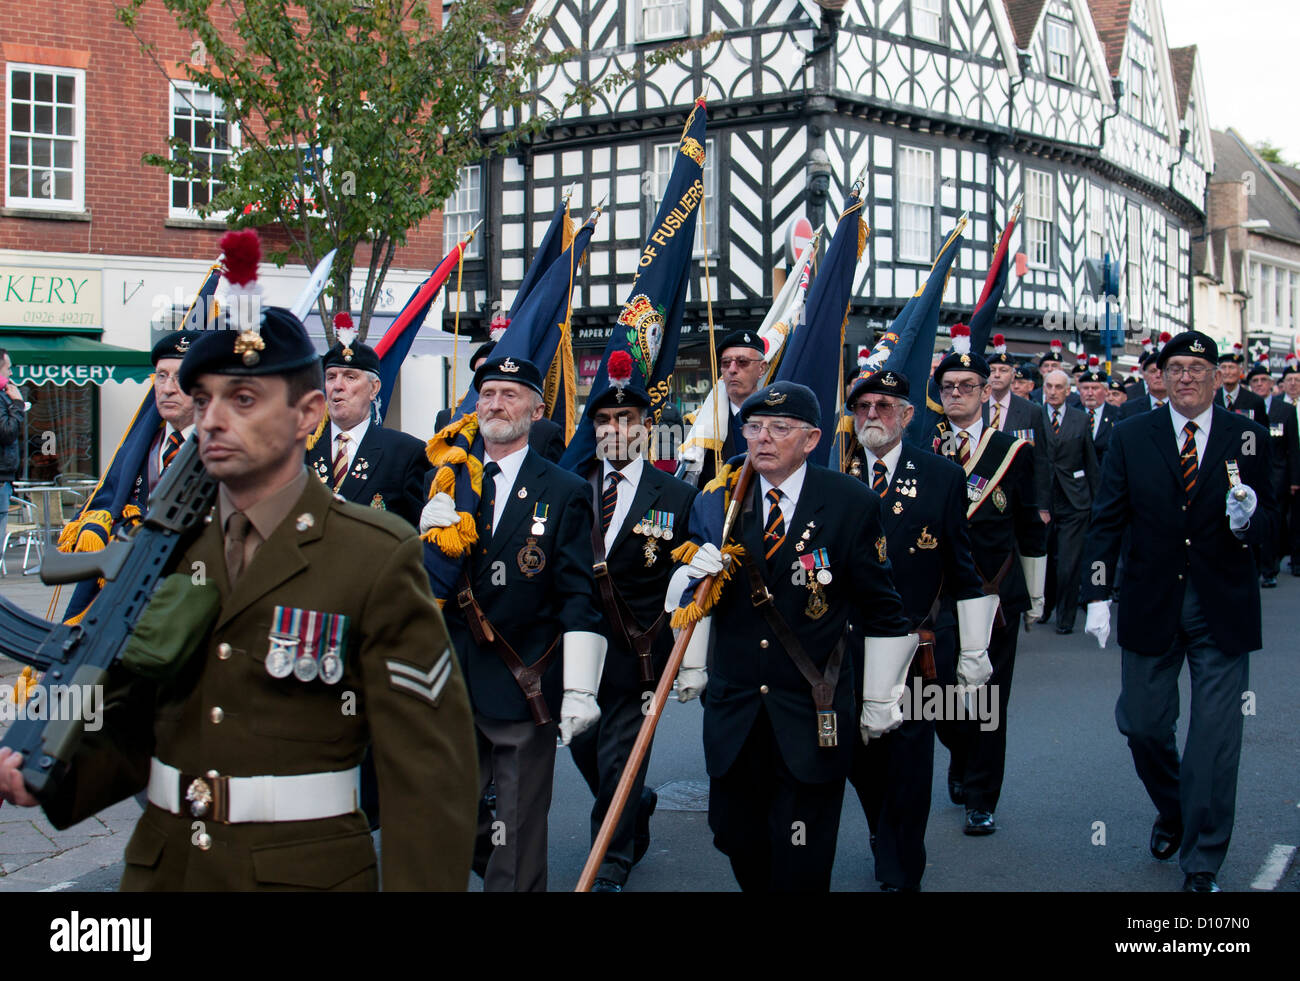 Royal Regiment of Fusiliers parade, Warwick, UK Stock Photo